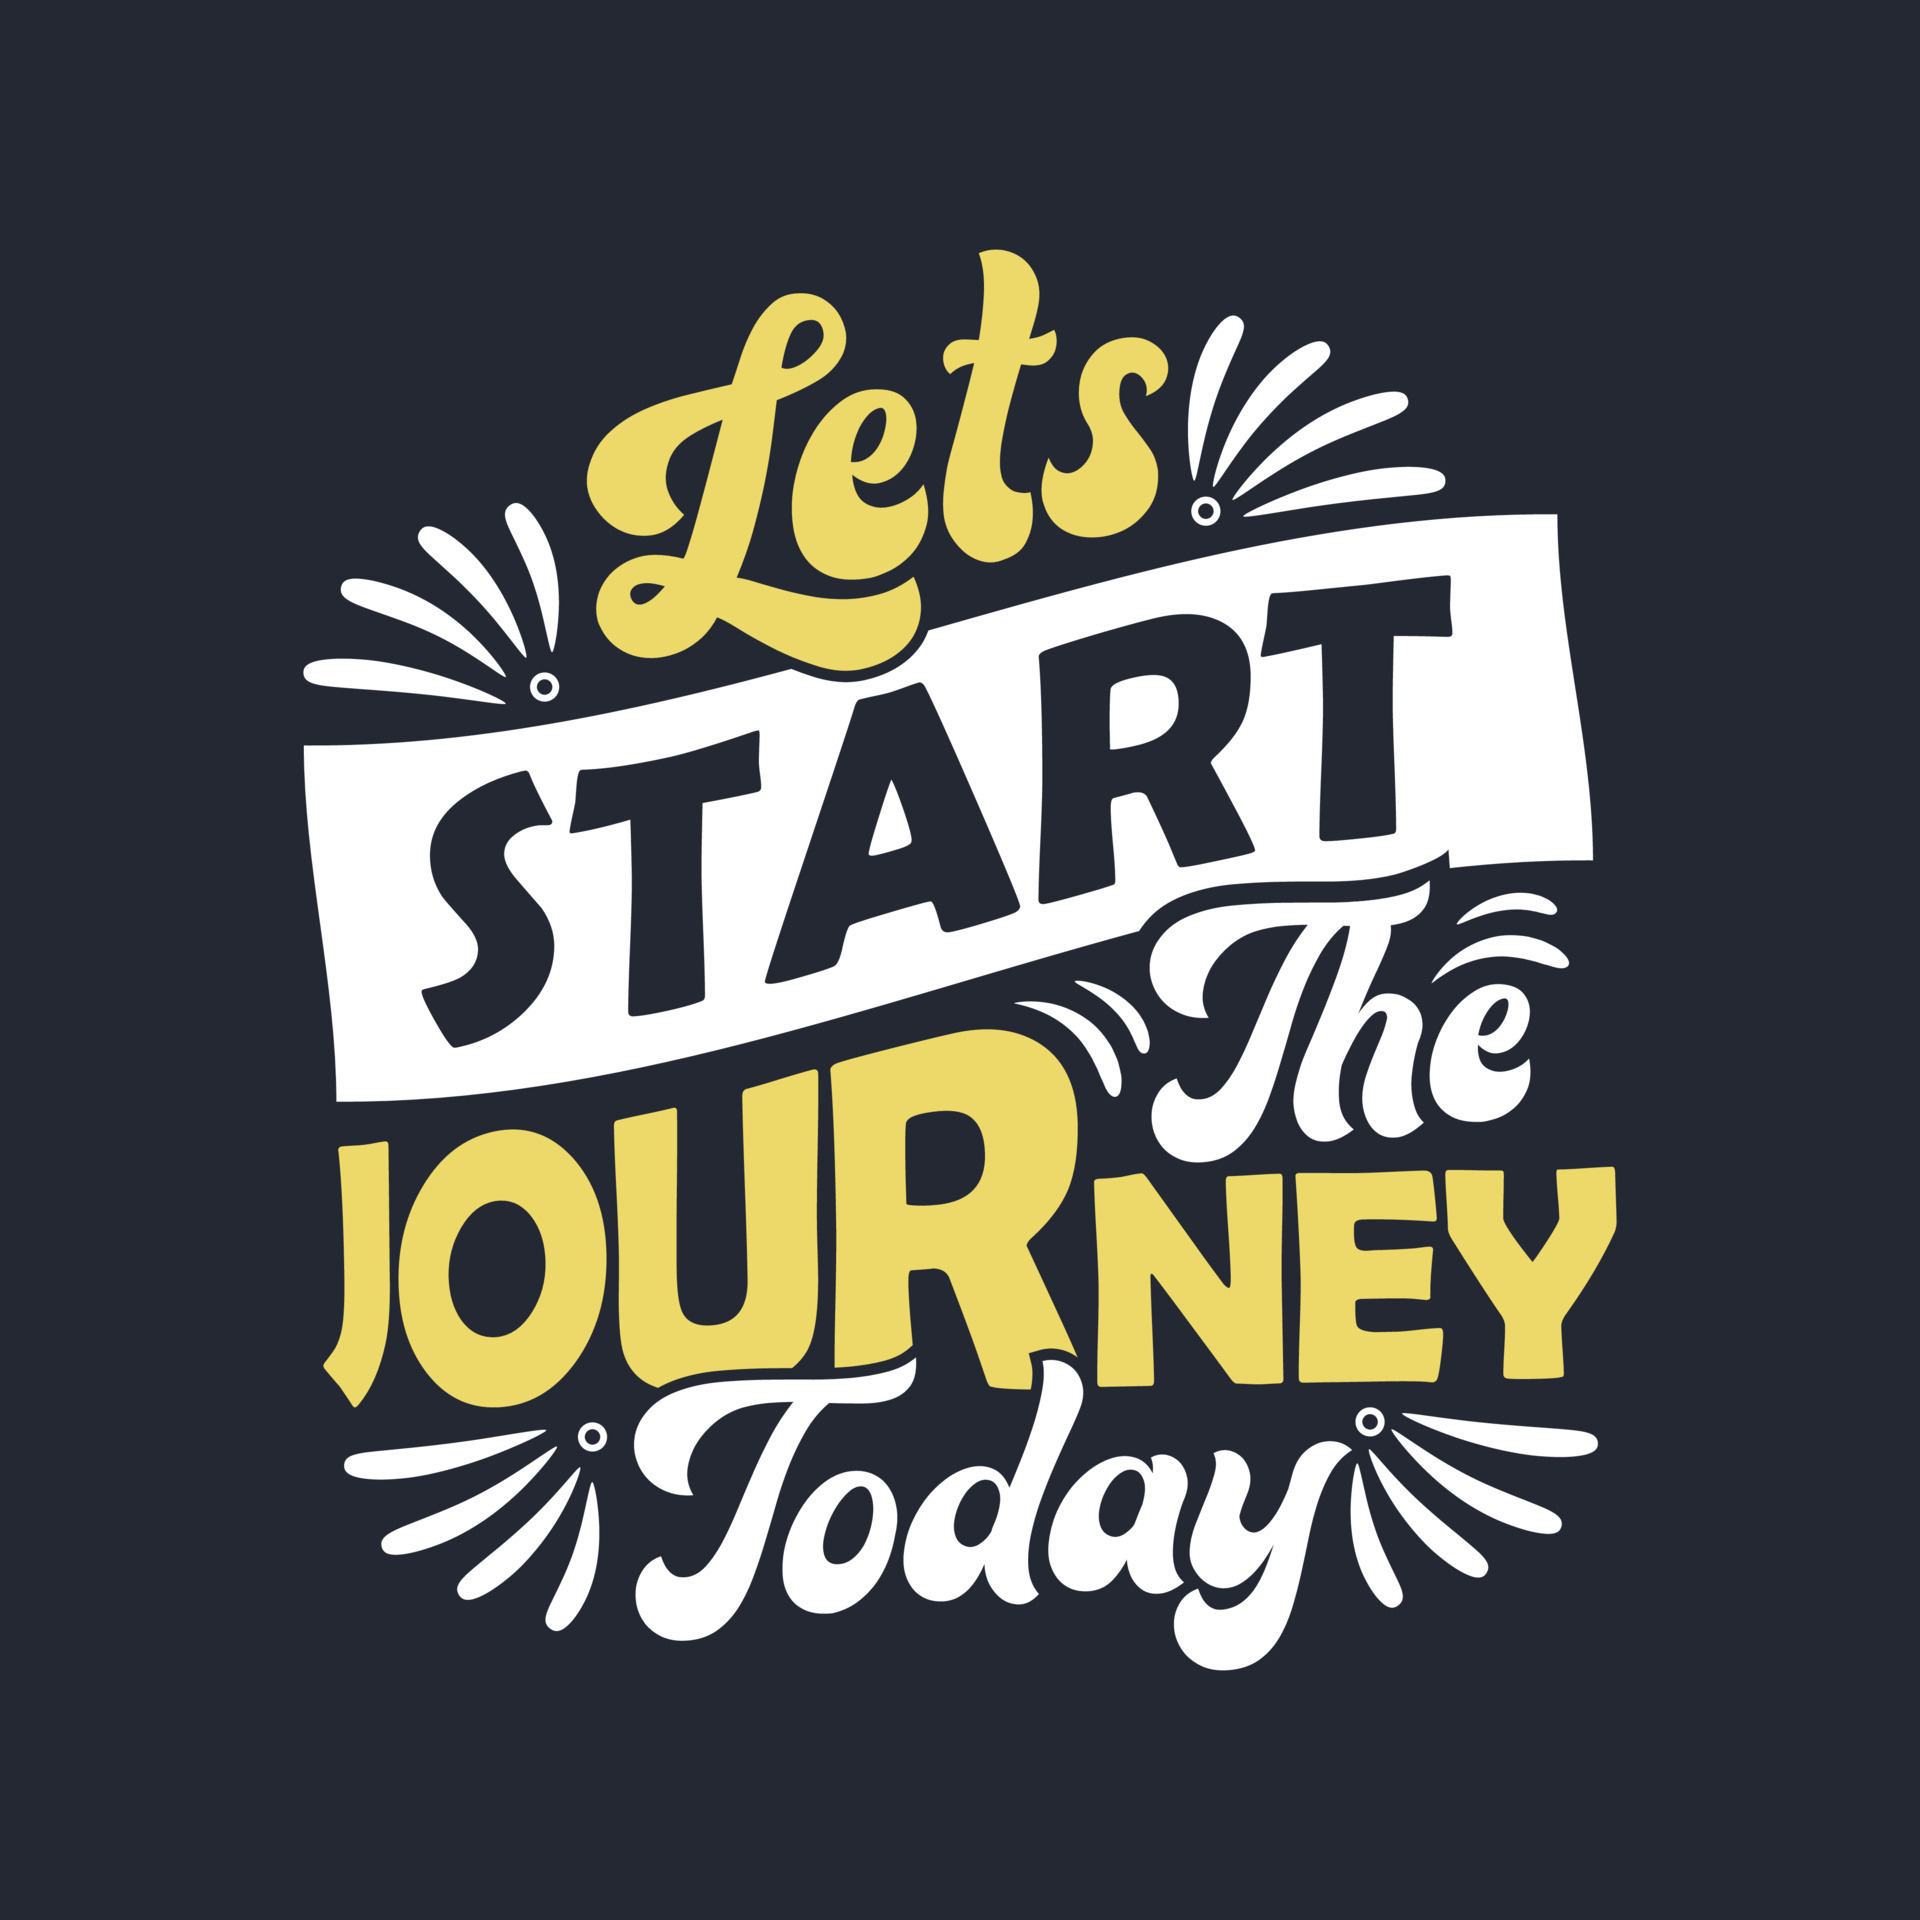 lettering design - Lets start the journey today - Motivational